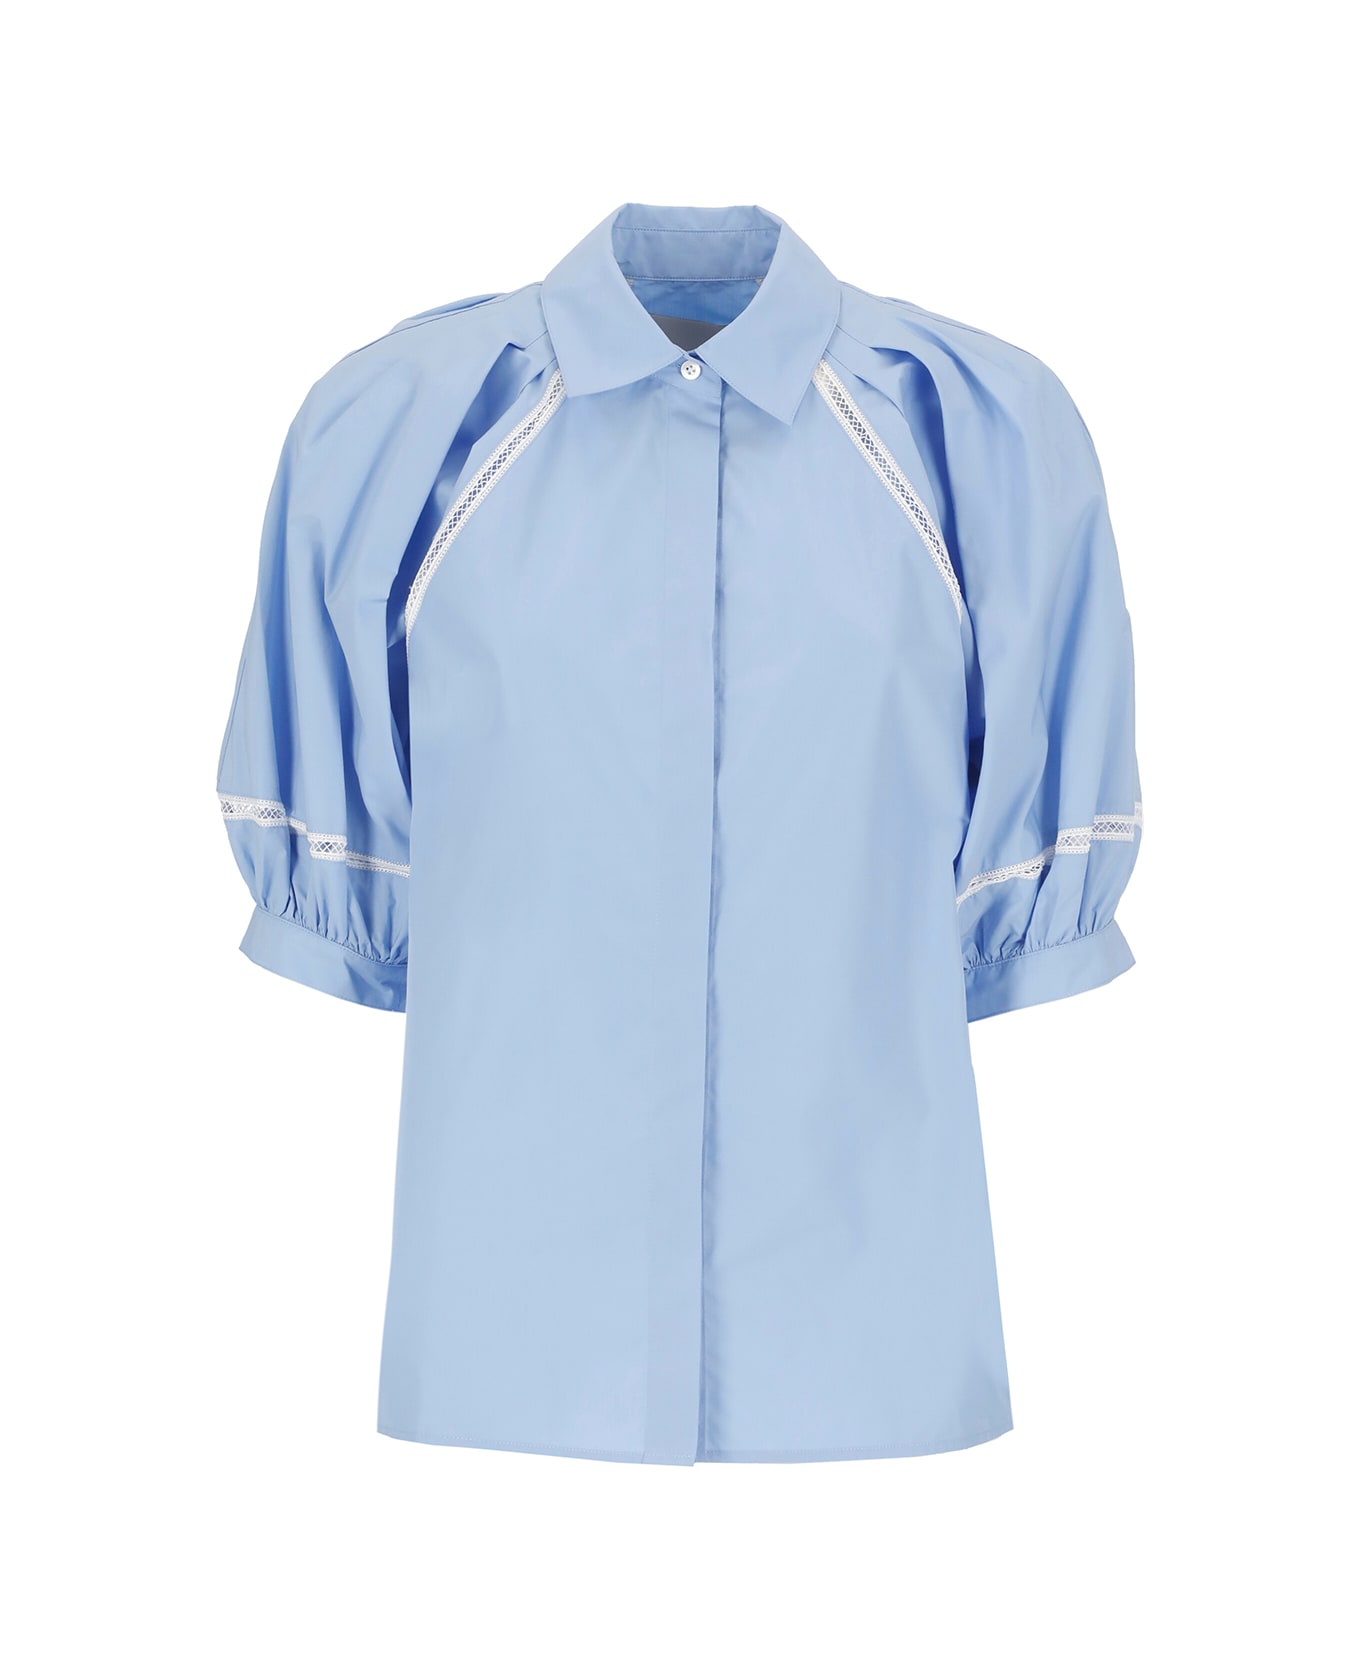 3.1 Phillip Lim Lantern Shirt - Light Blue